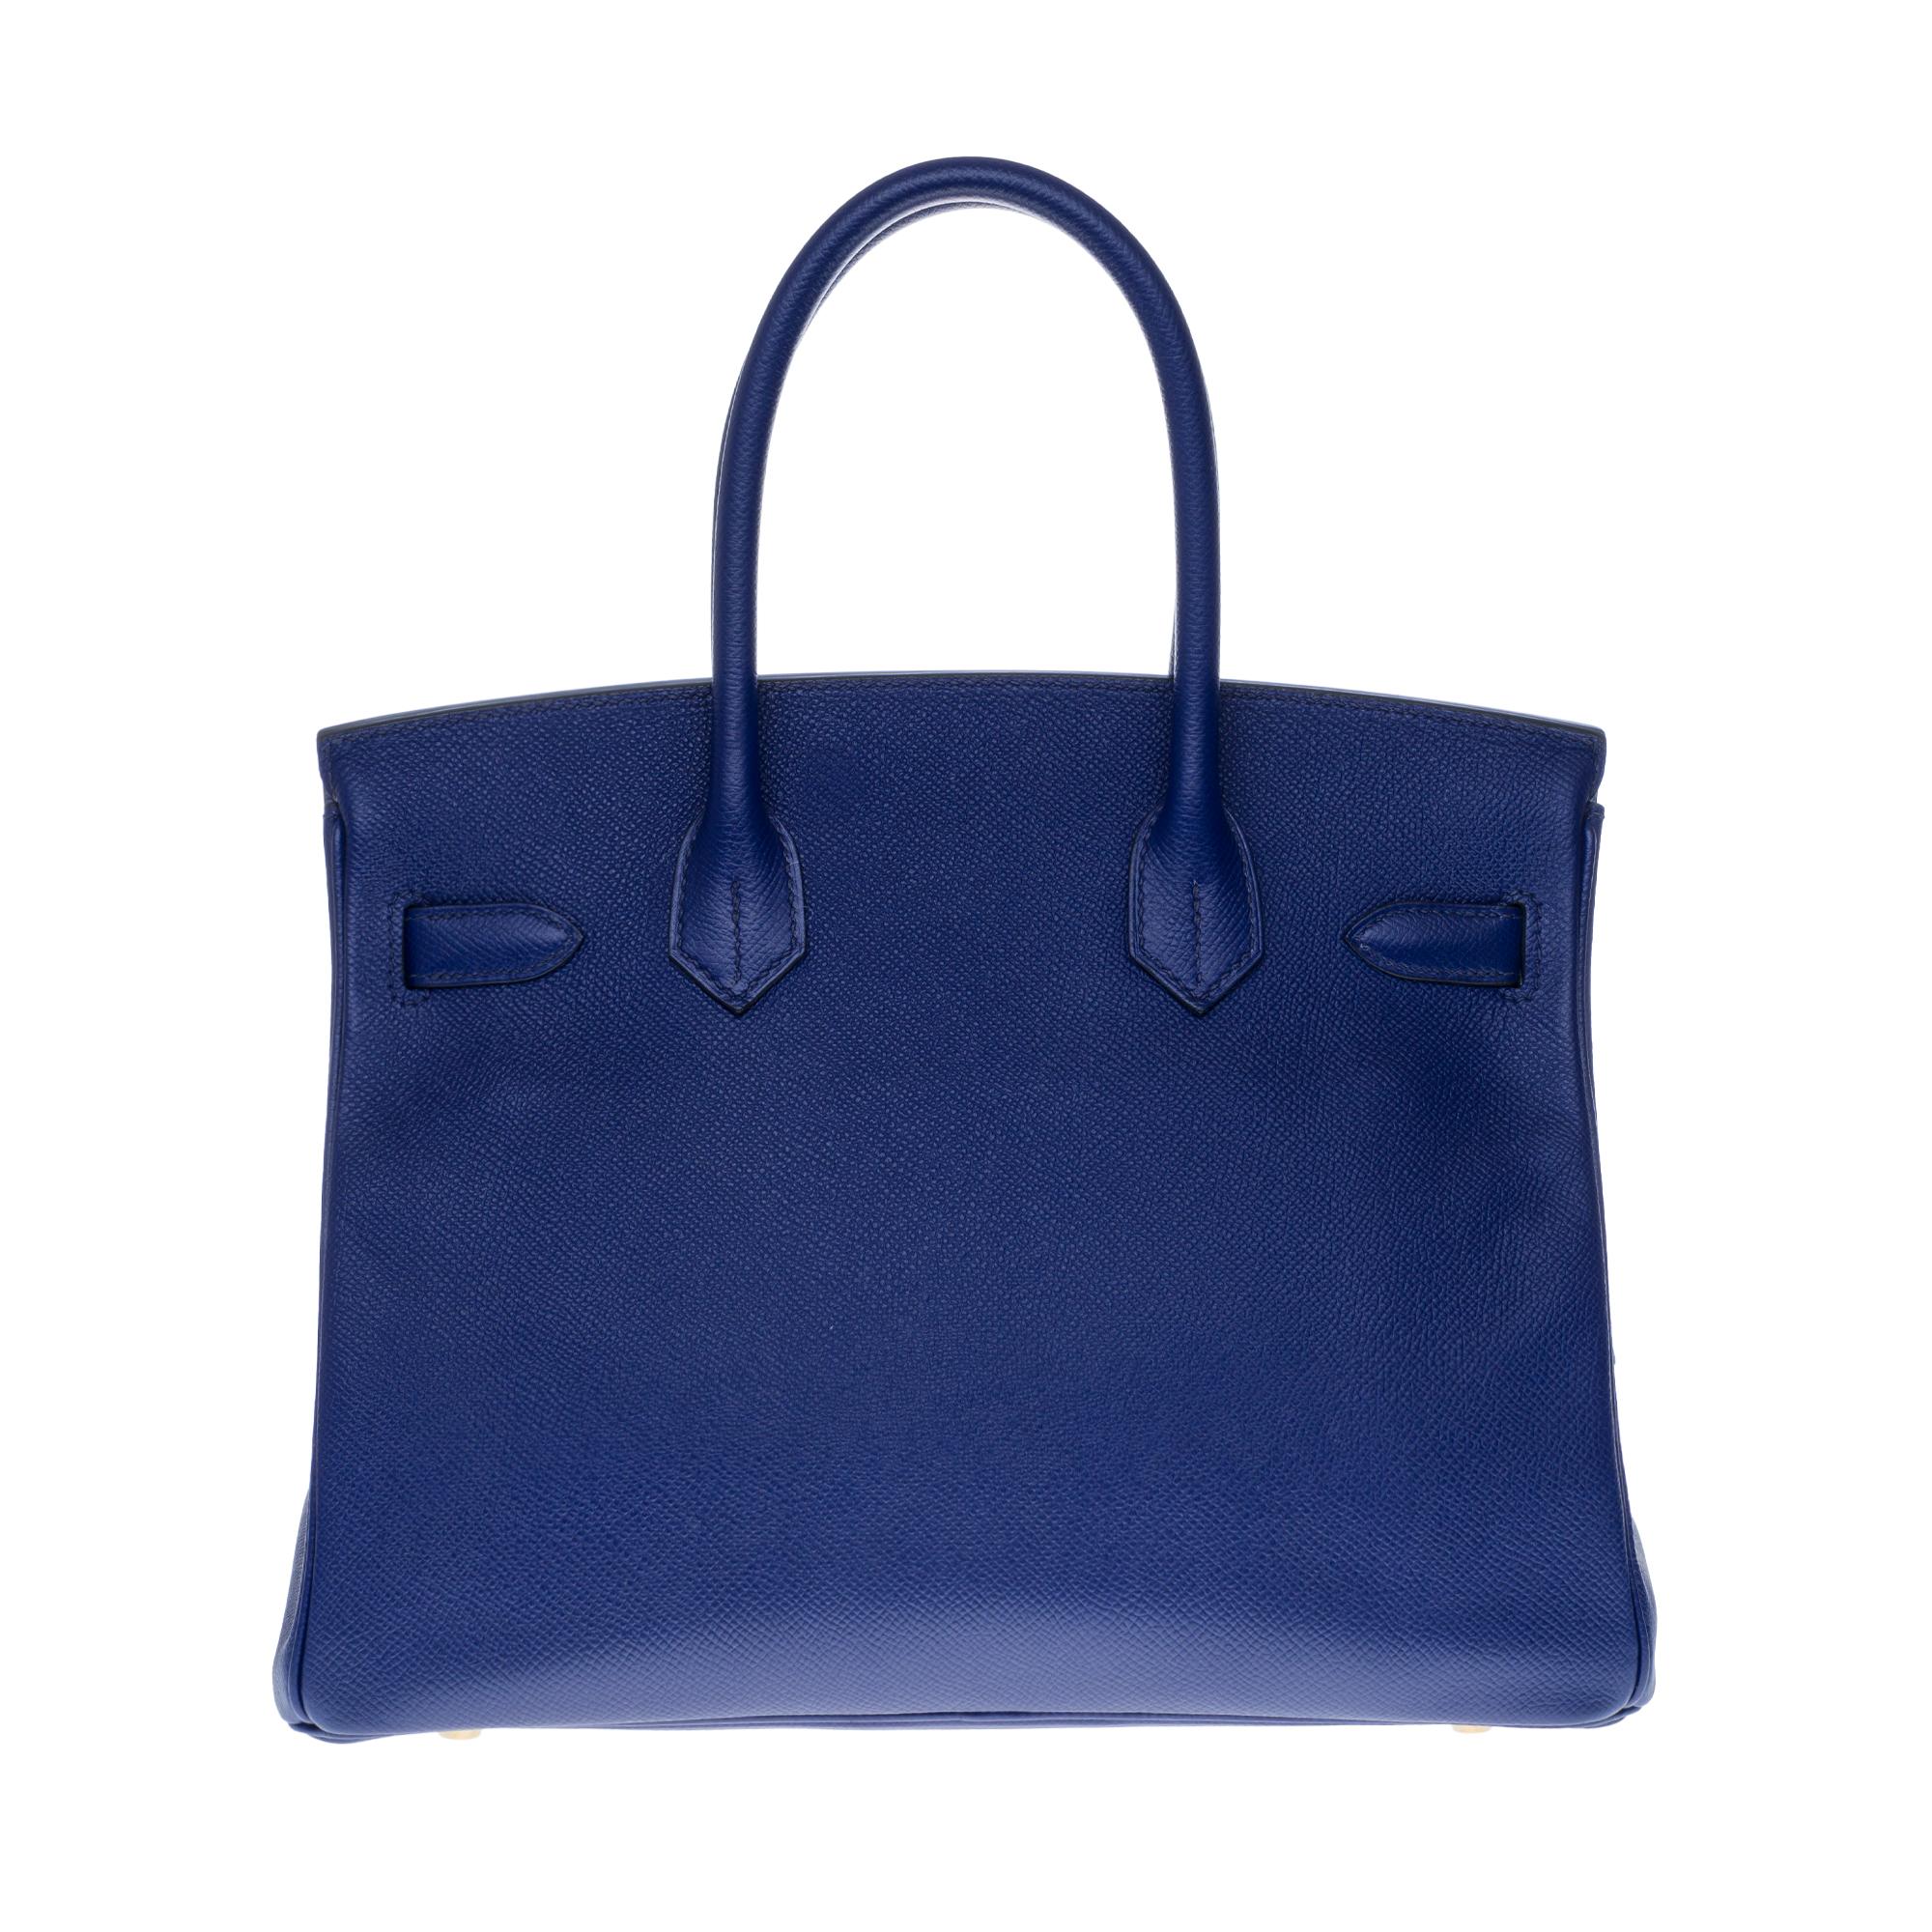 Purple Almost New - Hermès Birkin 30 handbag in Blue Encre Epsom leather, gold hardware